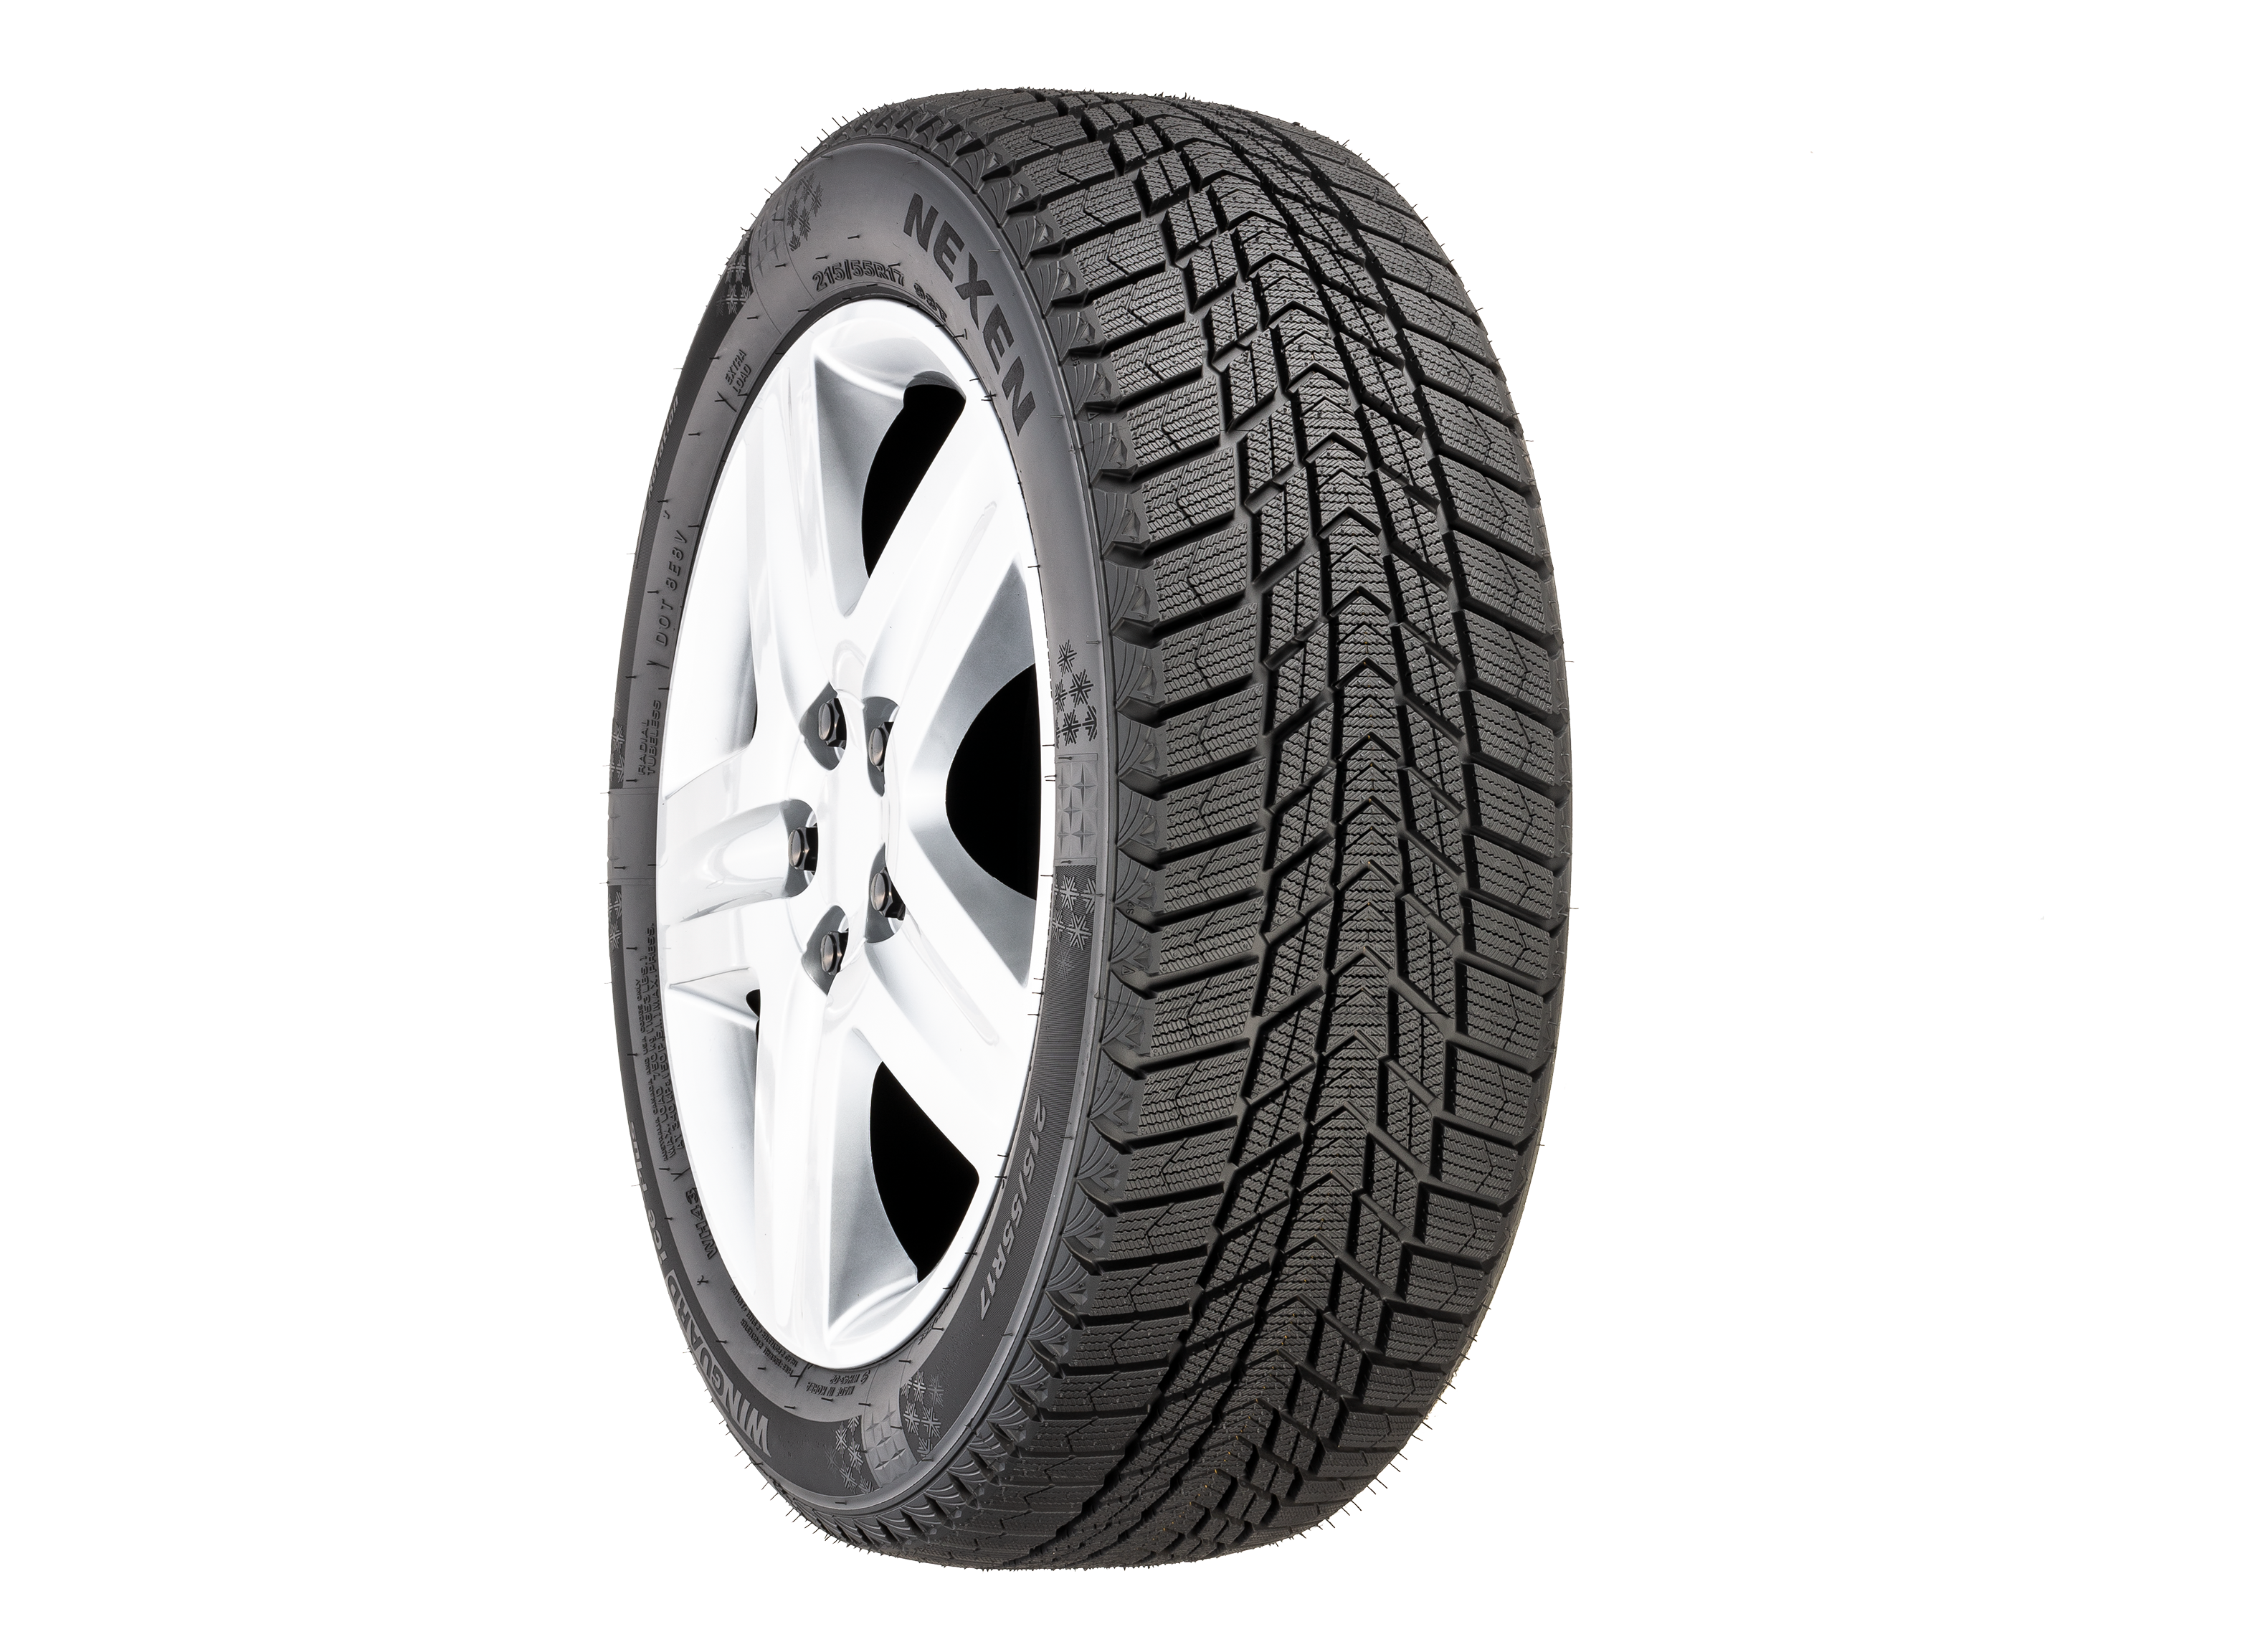 Nexen Winguard ice Consumer - Tire Reports Review Plus